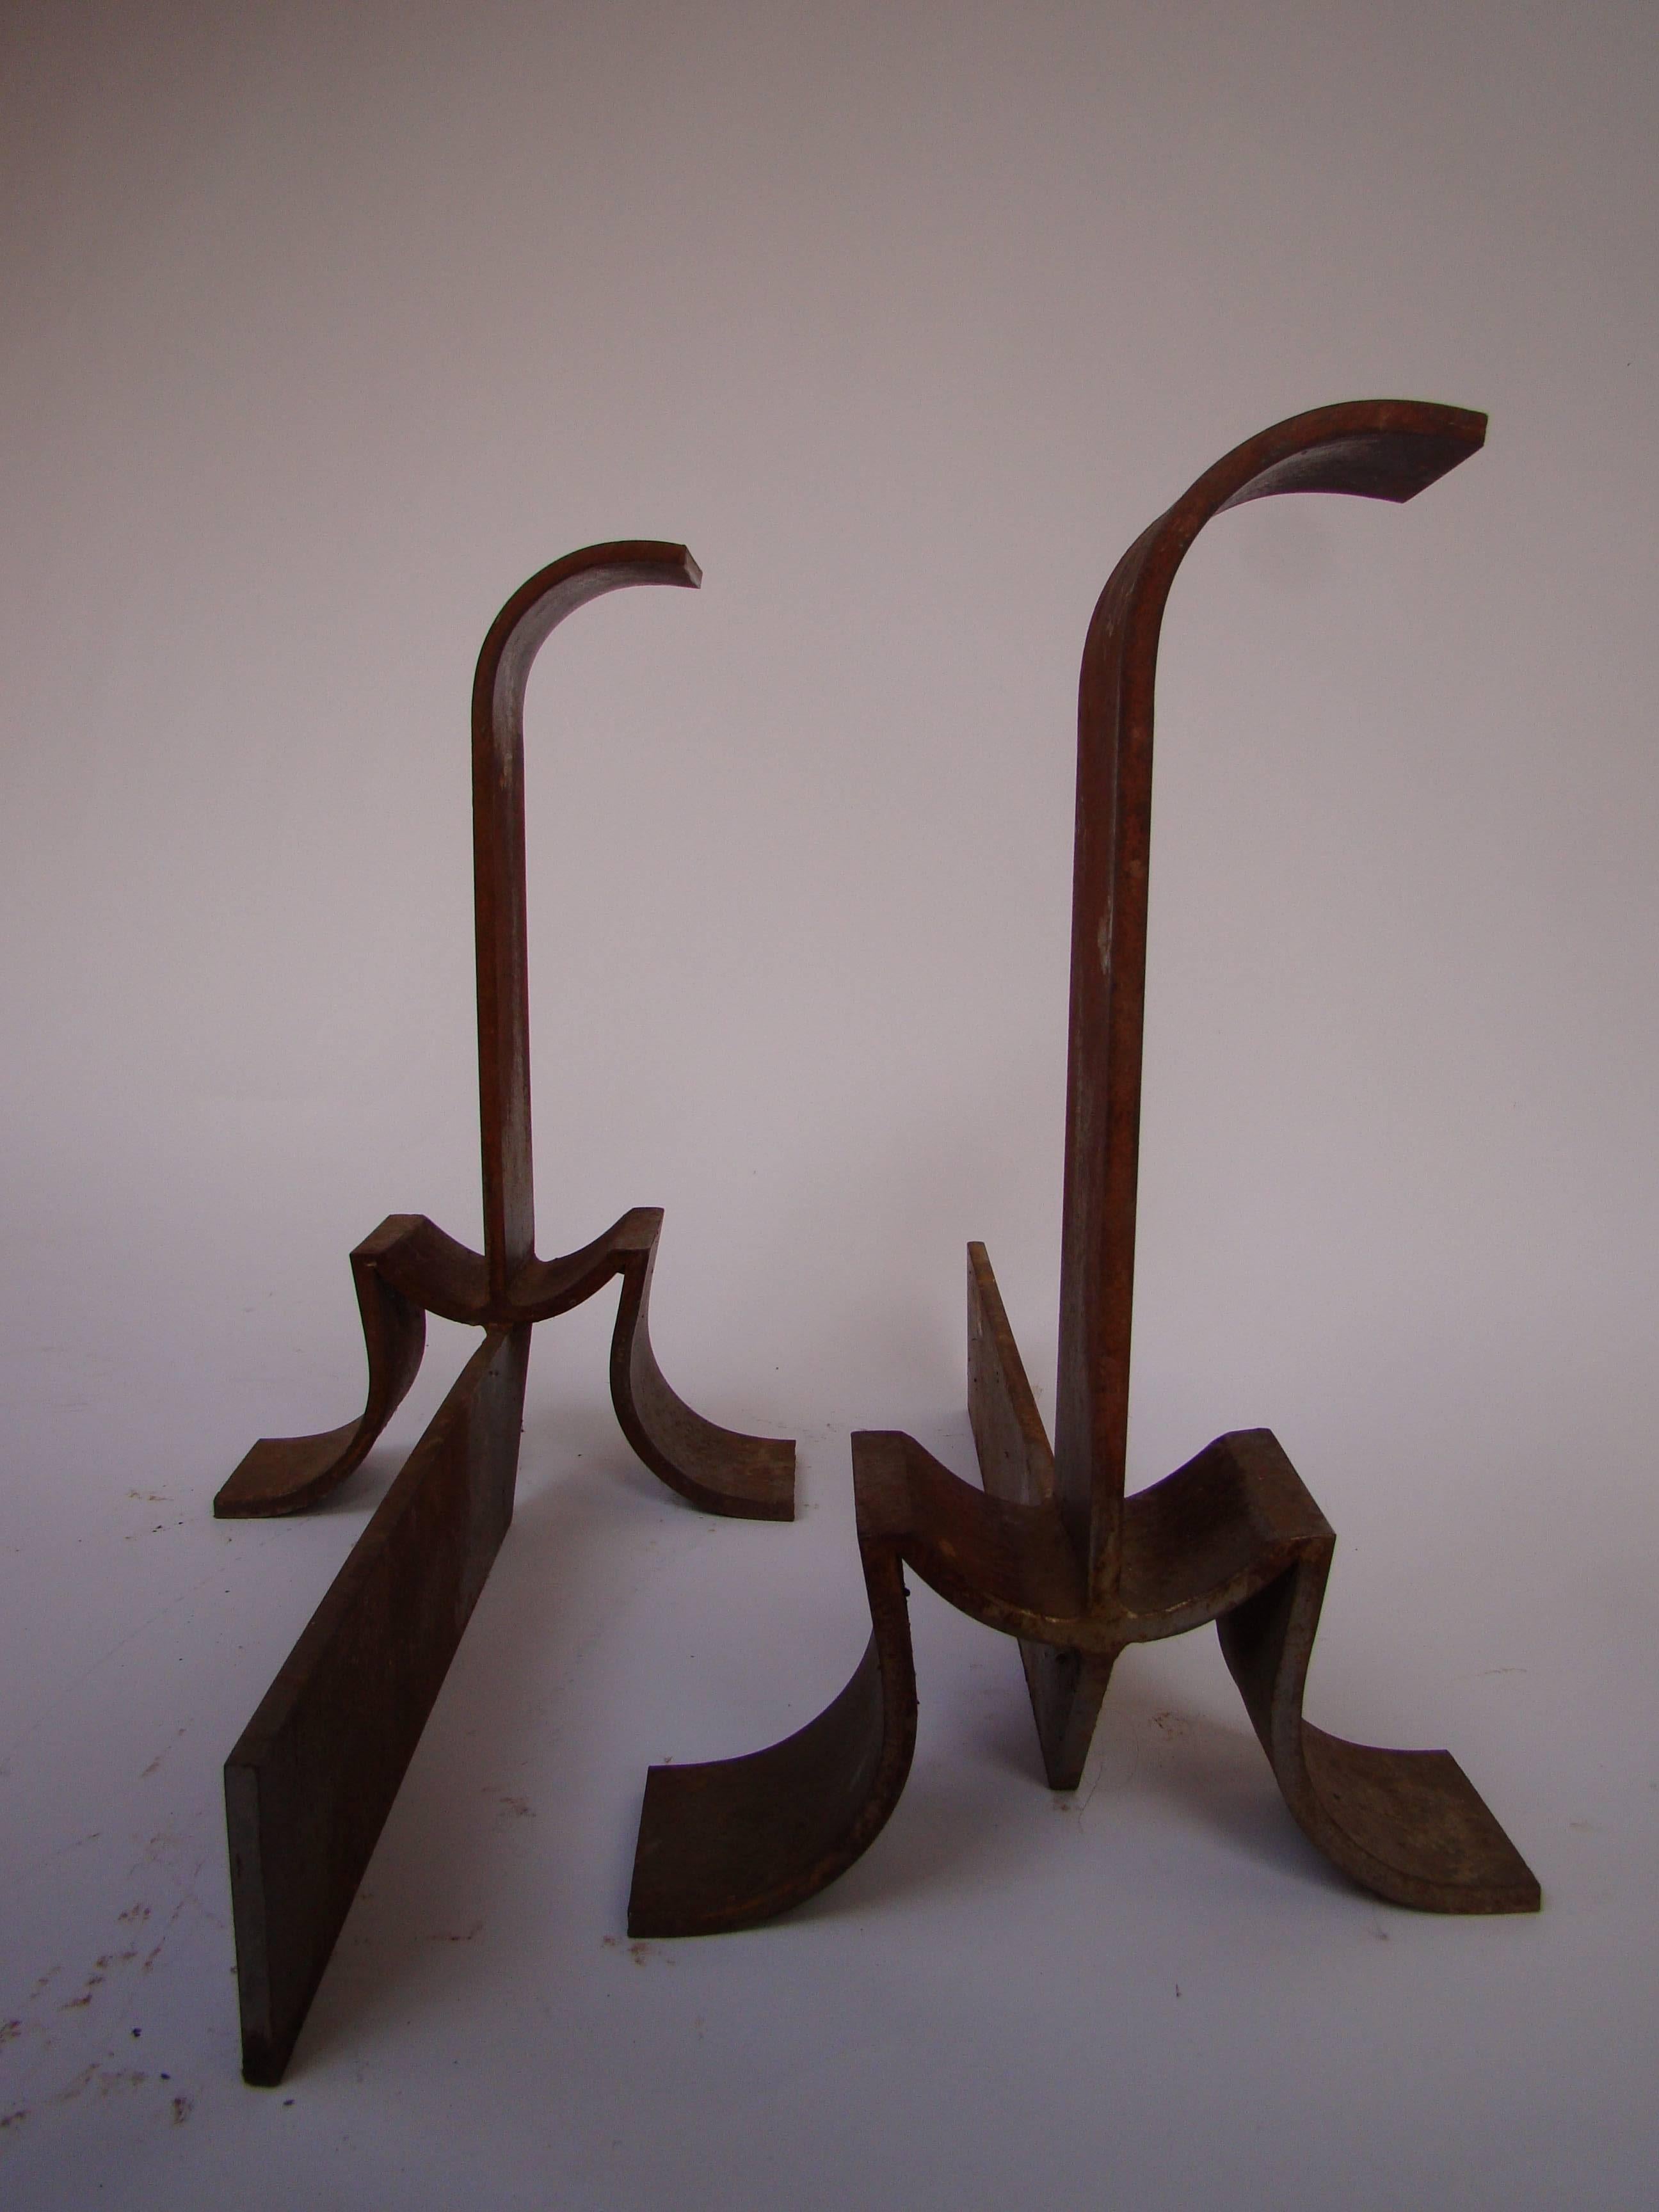 Pair of steel andirons, circa 1970
Measure: Height 38 cm
Diameter 45 cm.